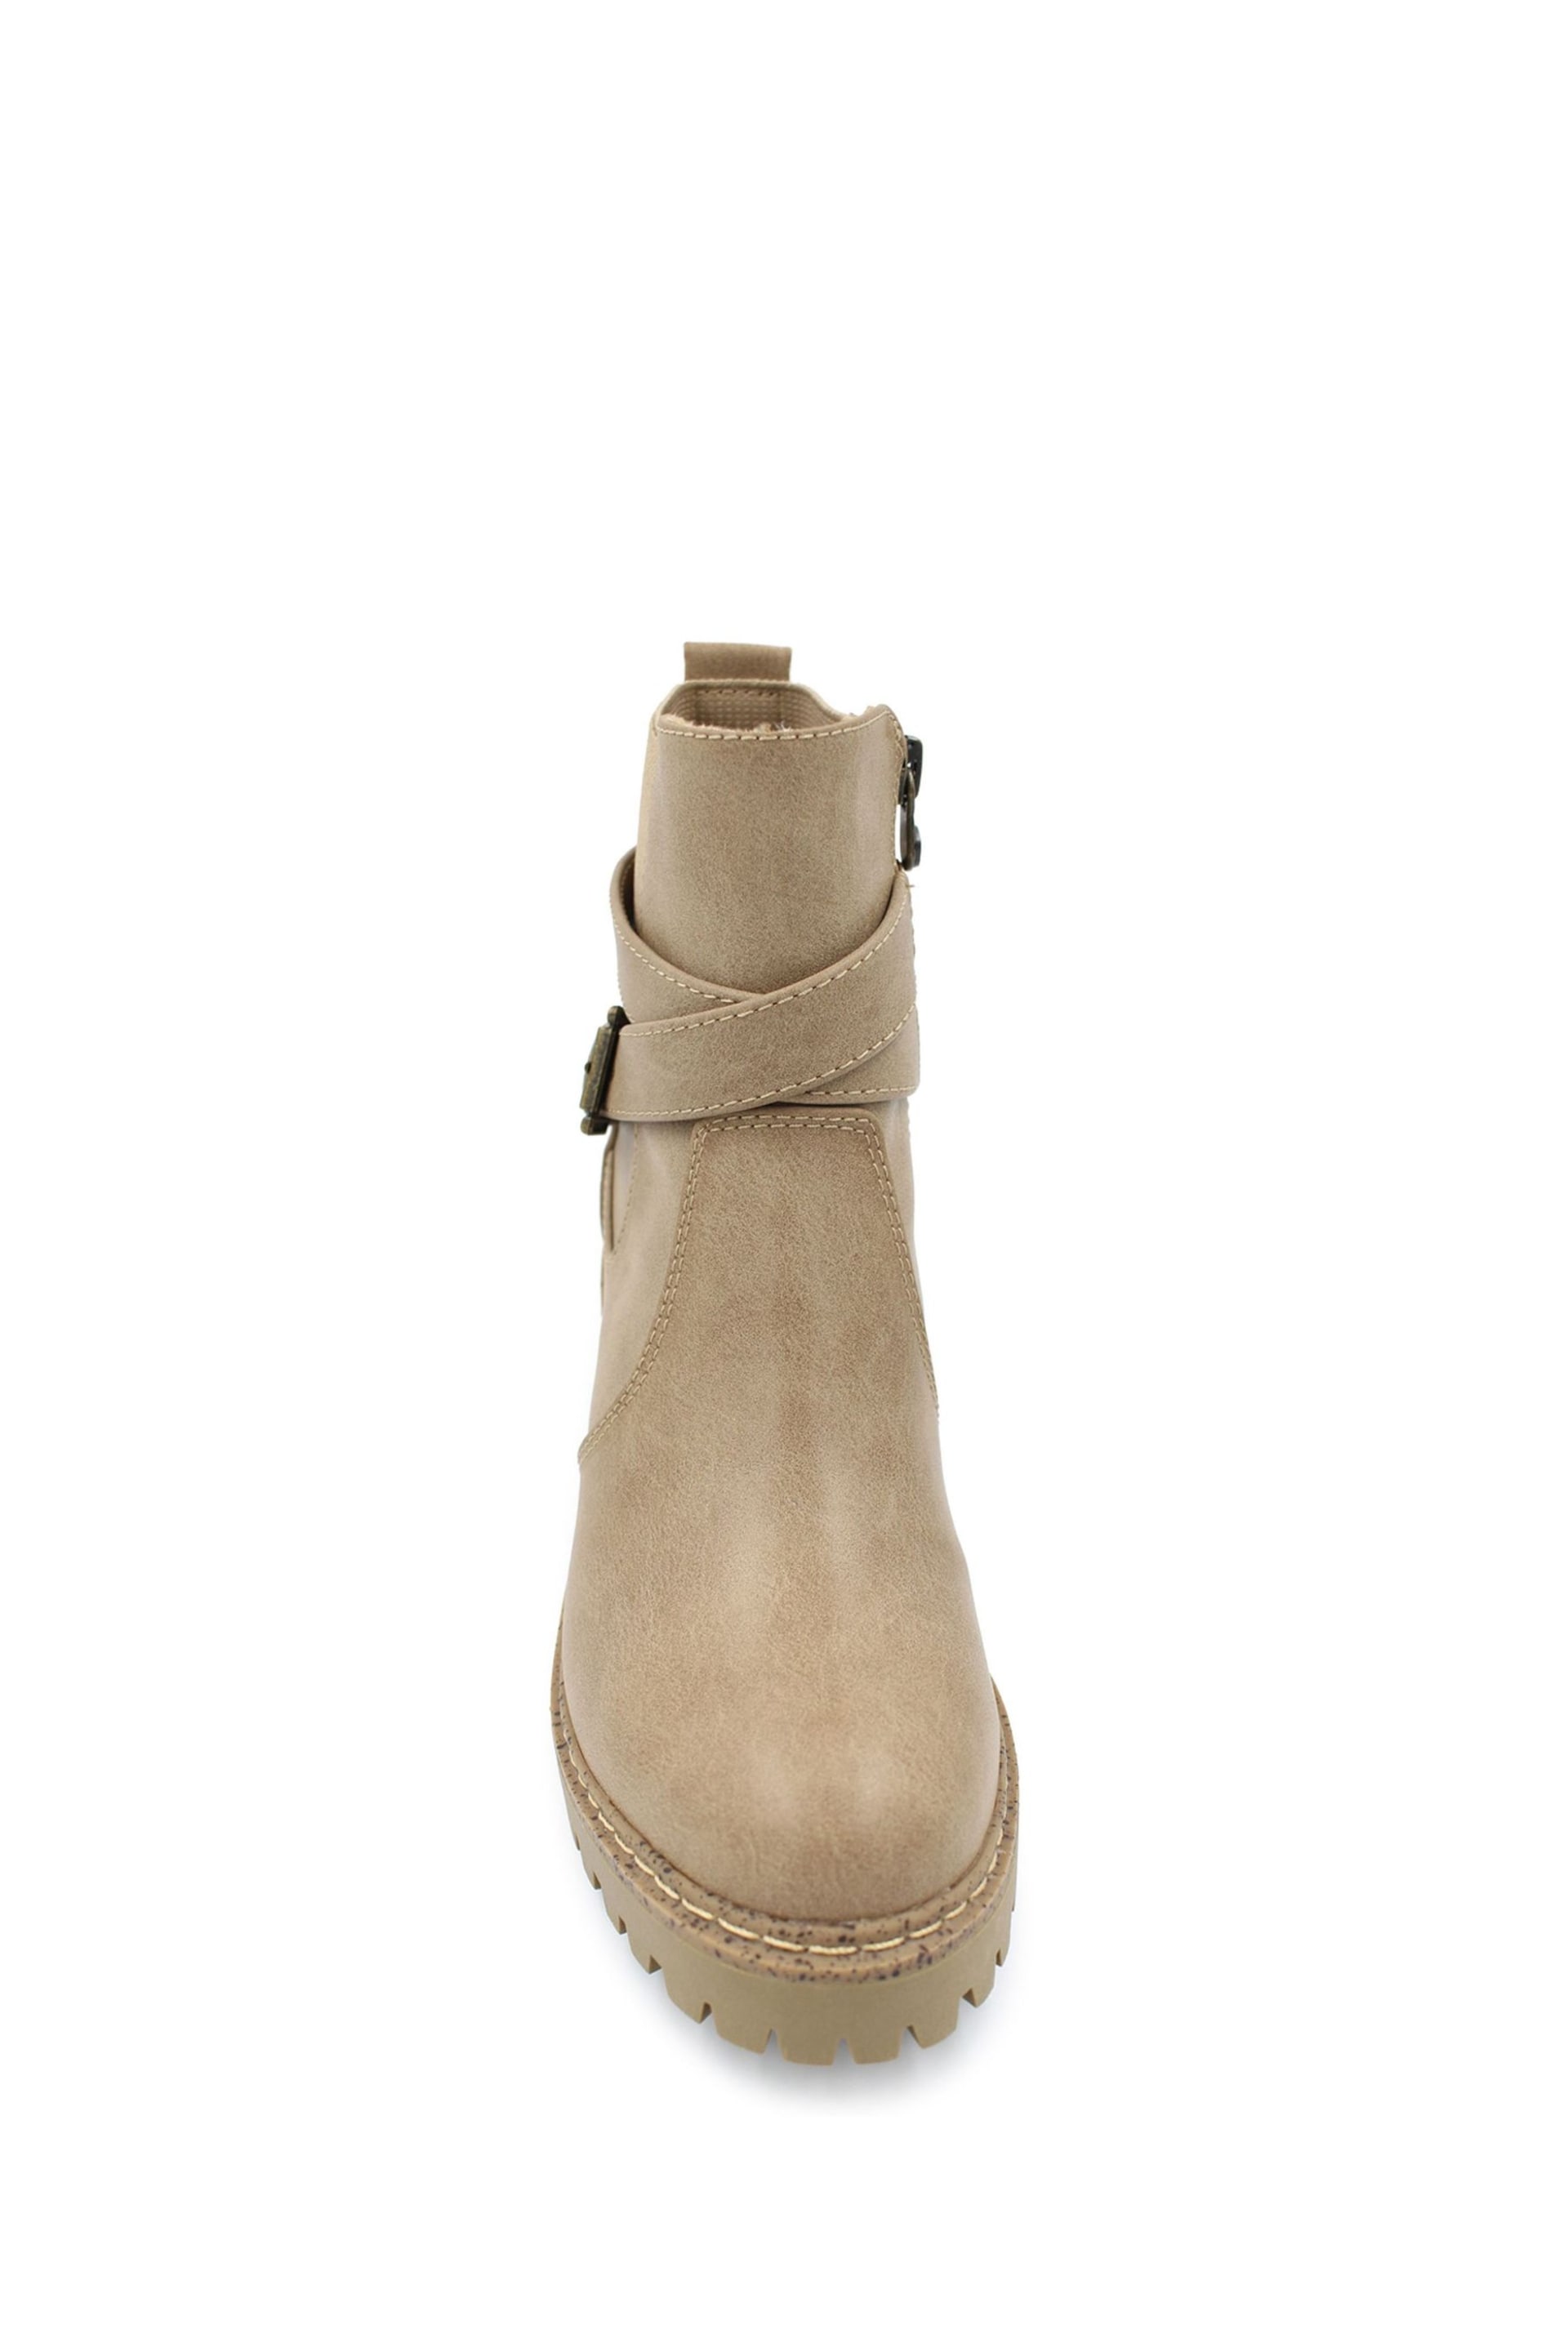 Blowfish Malibu Womens Lifted Heeled Strap Chelsea Boots - Image 3 of 3